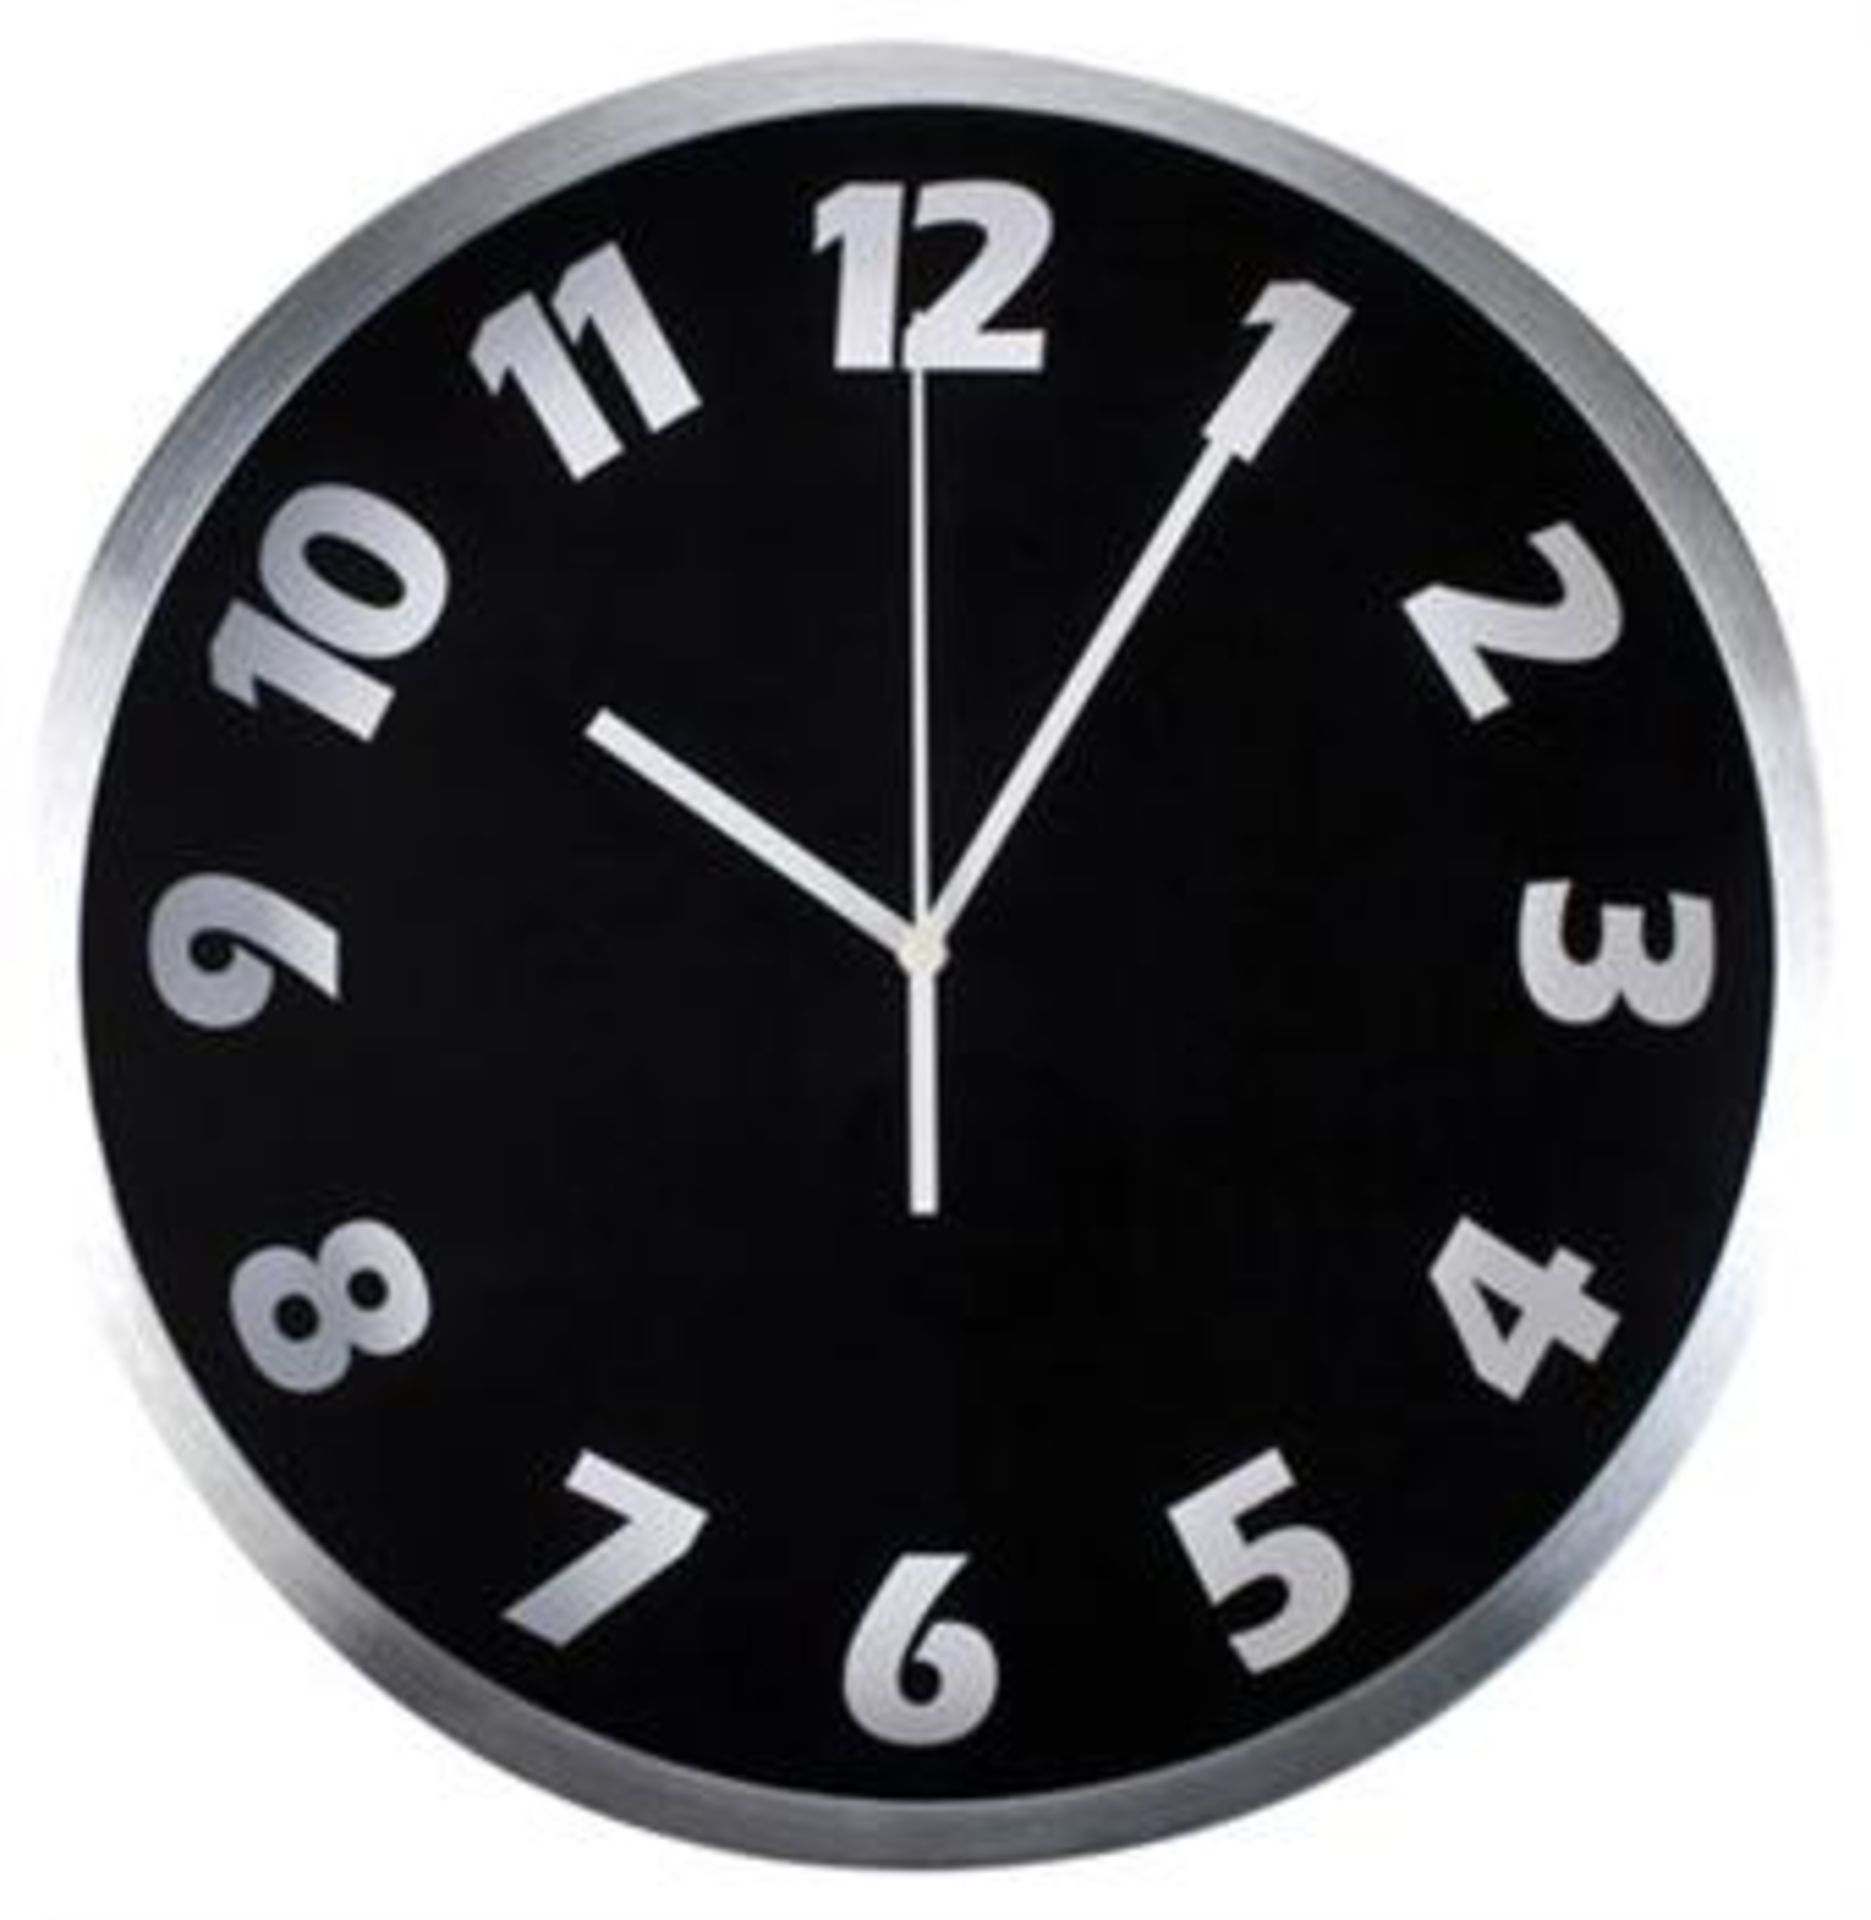 V Brand New Brushed aluminium case wall clock 30cm diameter RRP 39.99